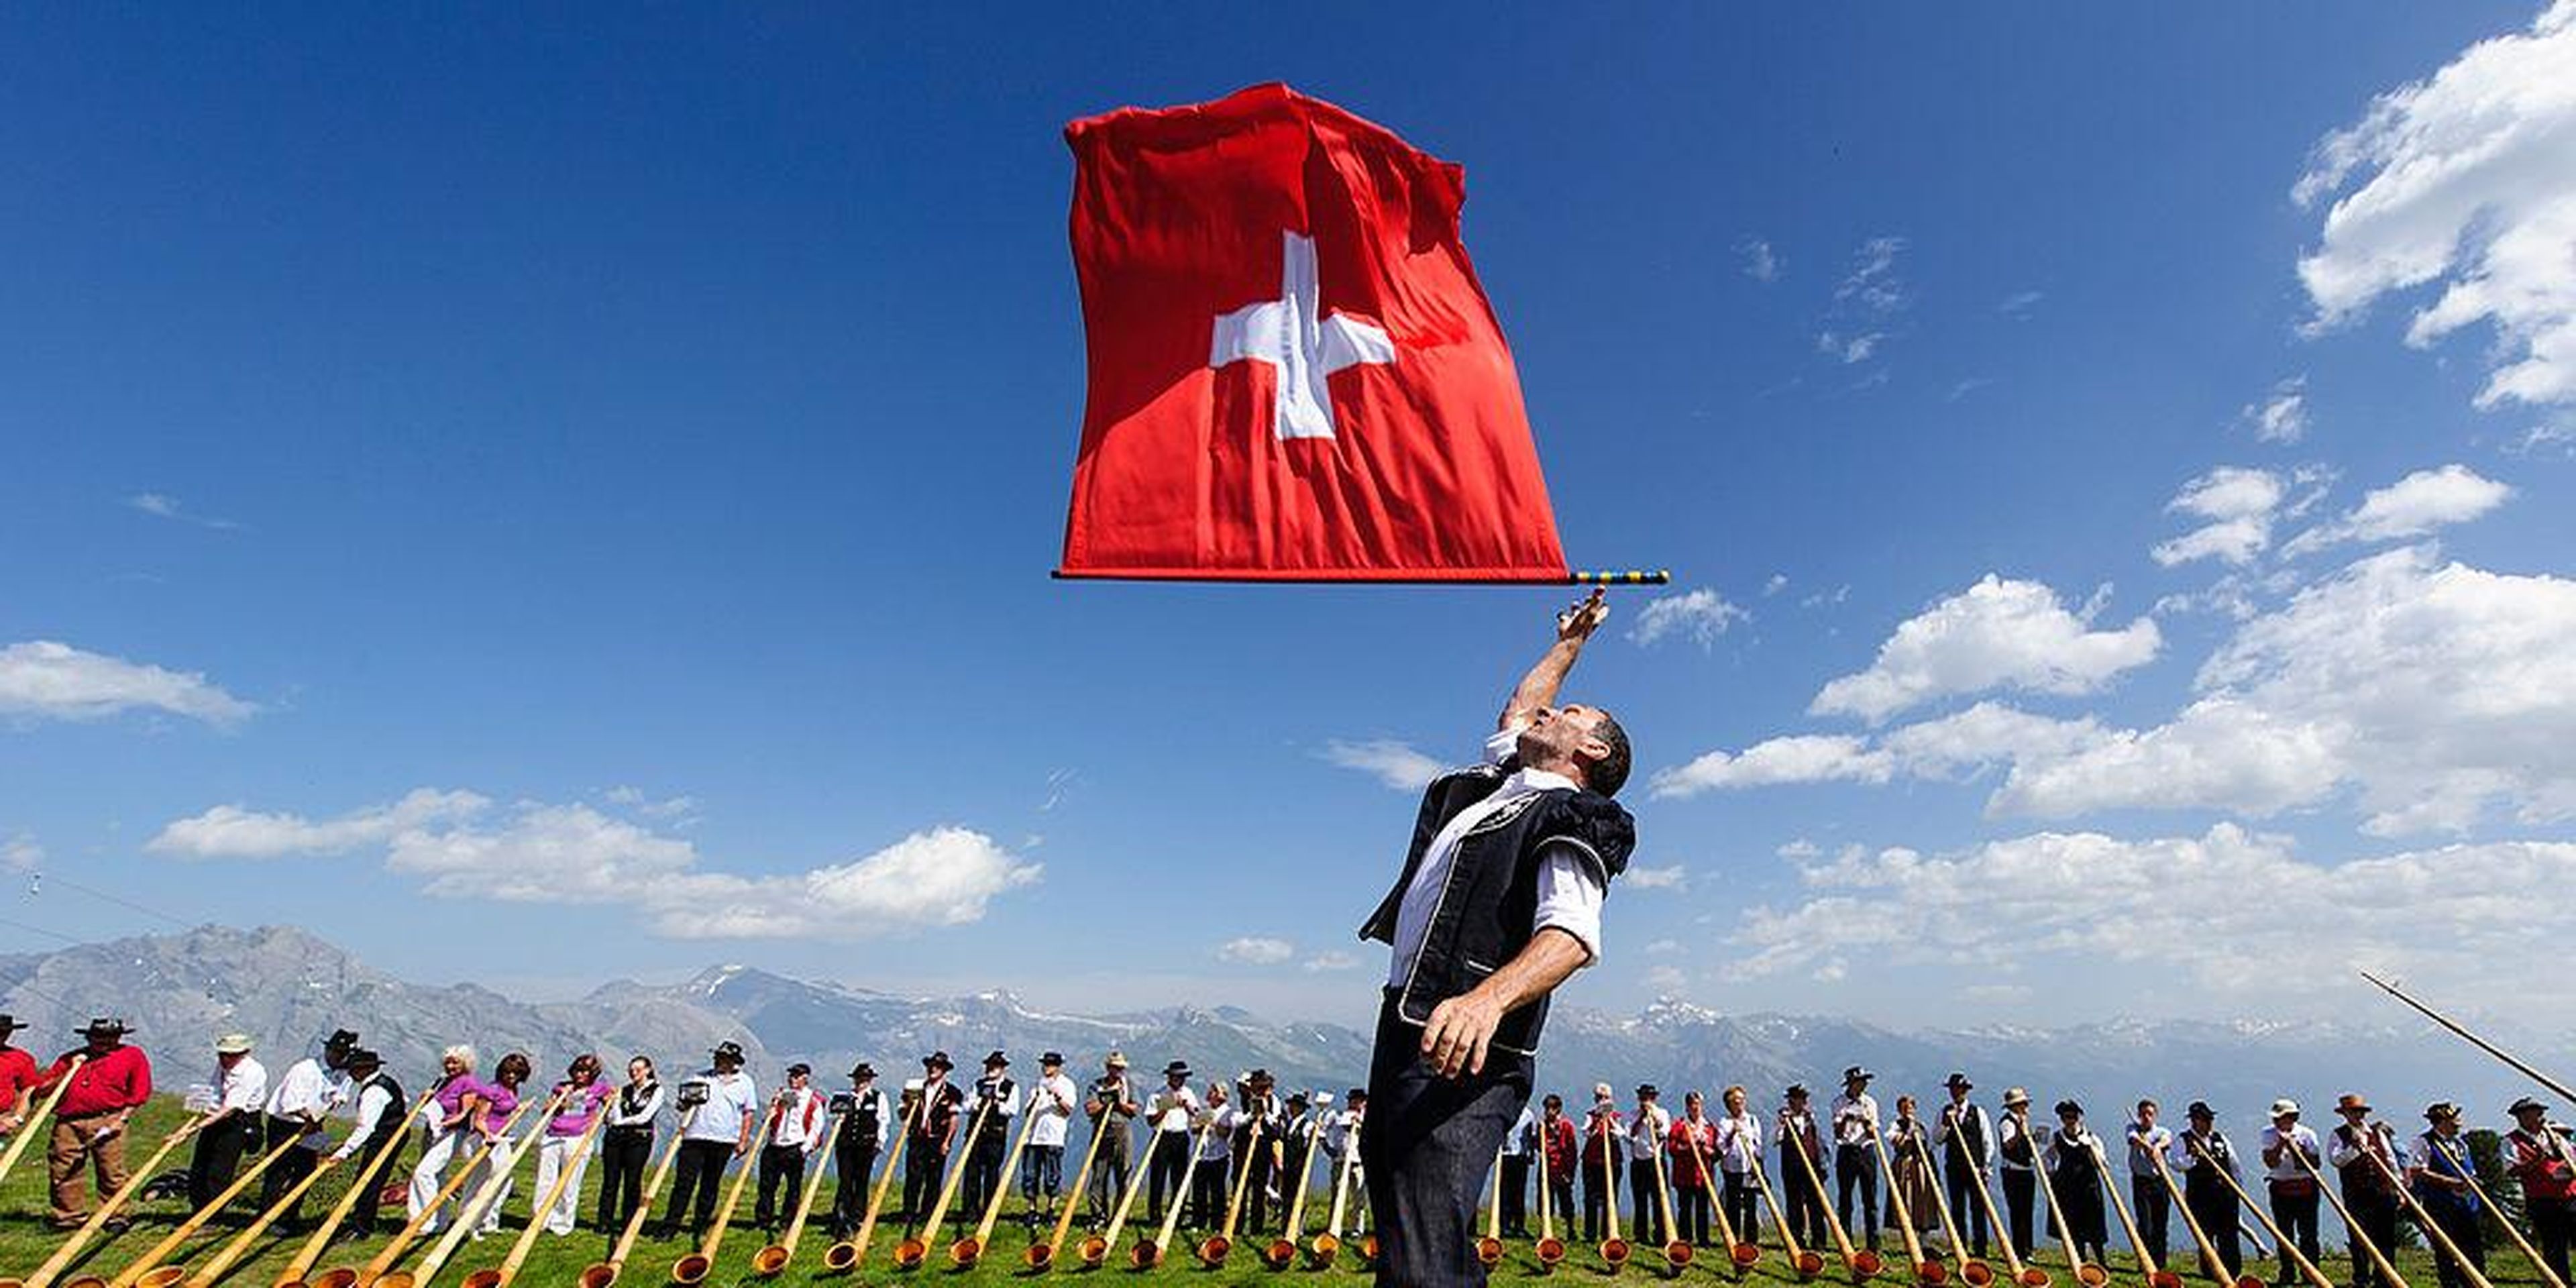 2. Switzerland